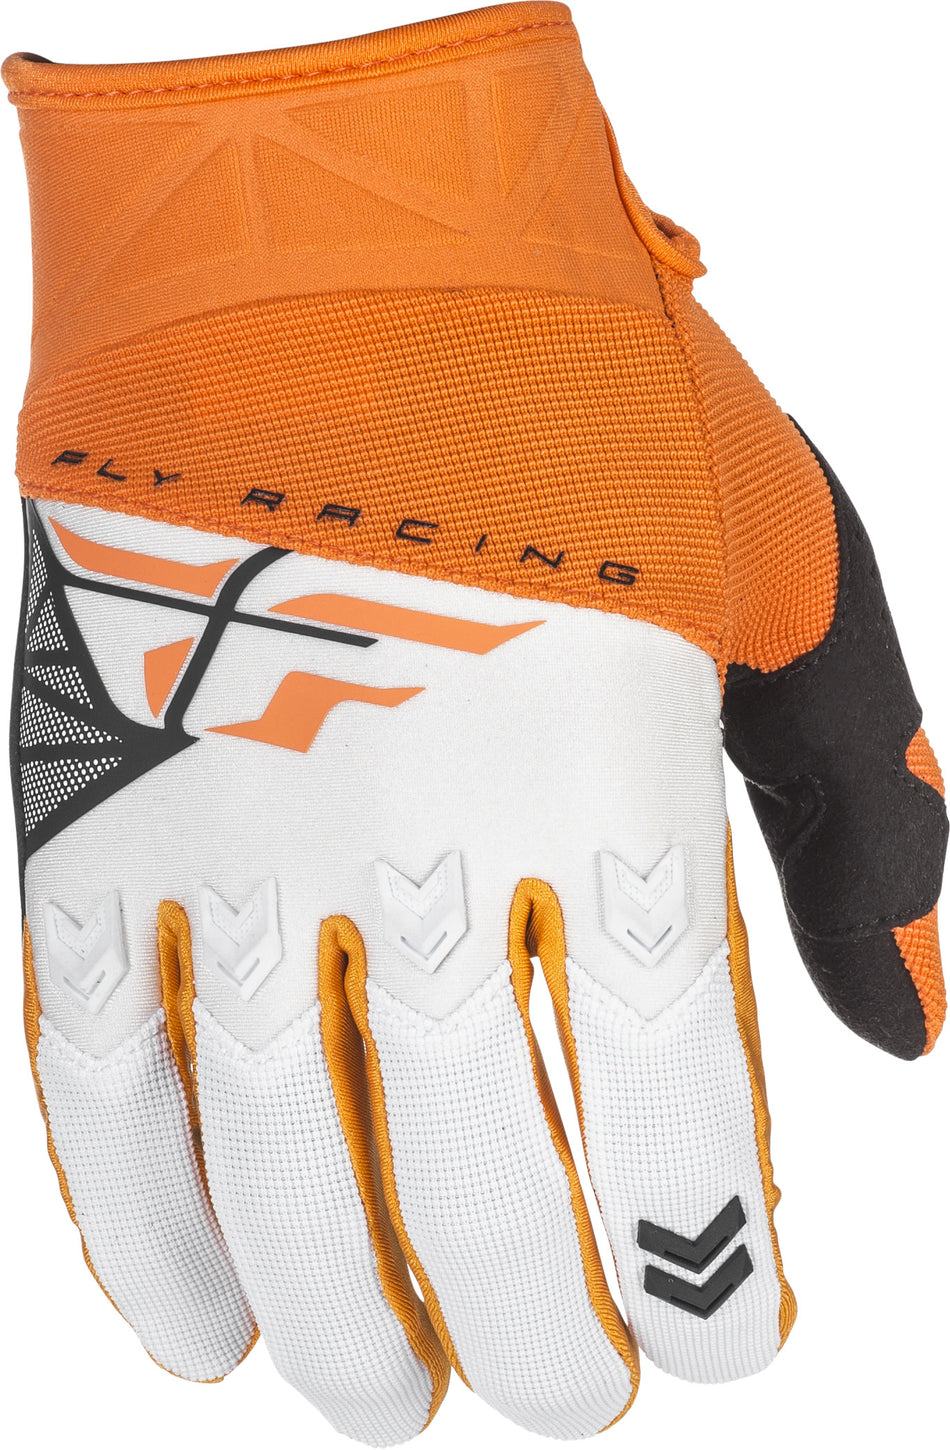 FLY RACING F-16 Gloves Orange/White Sz 11 371-91811